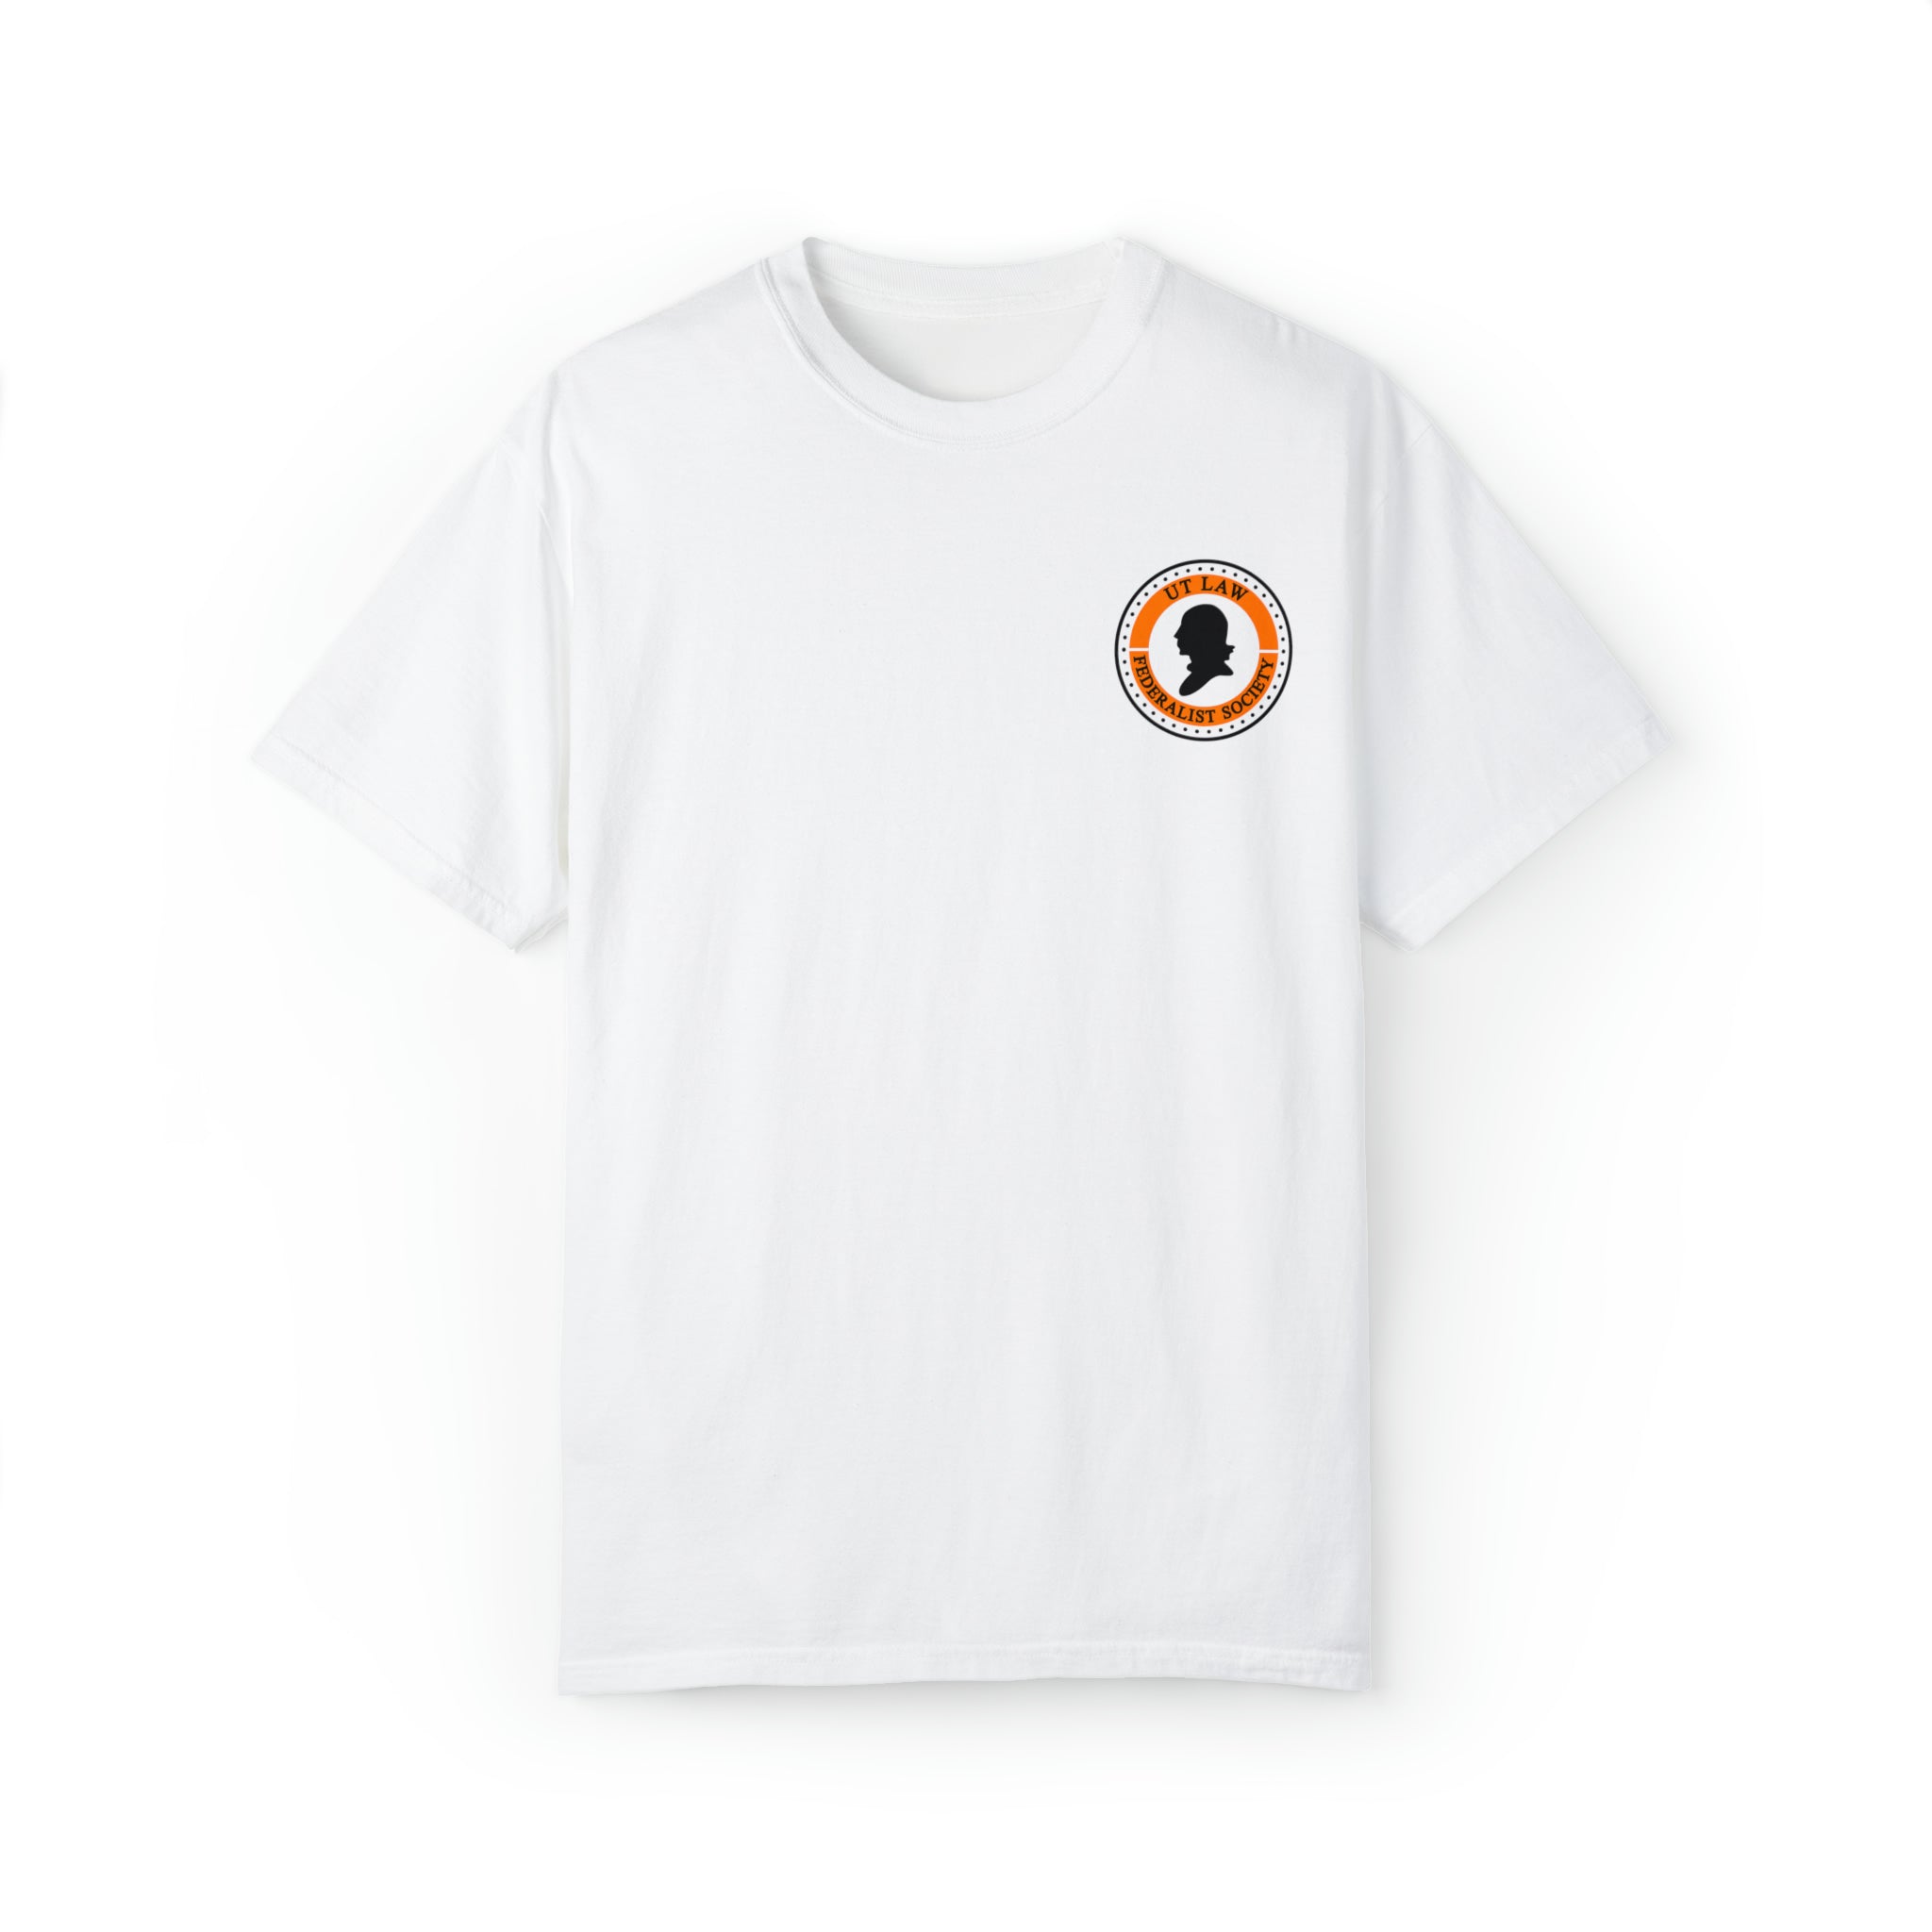 Seal Comfort Colors Shirt (Tennessee Fed Soc)